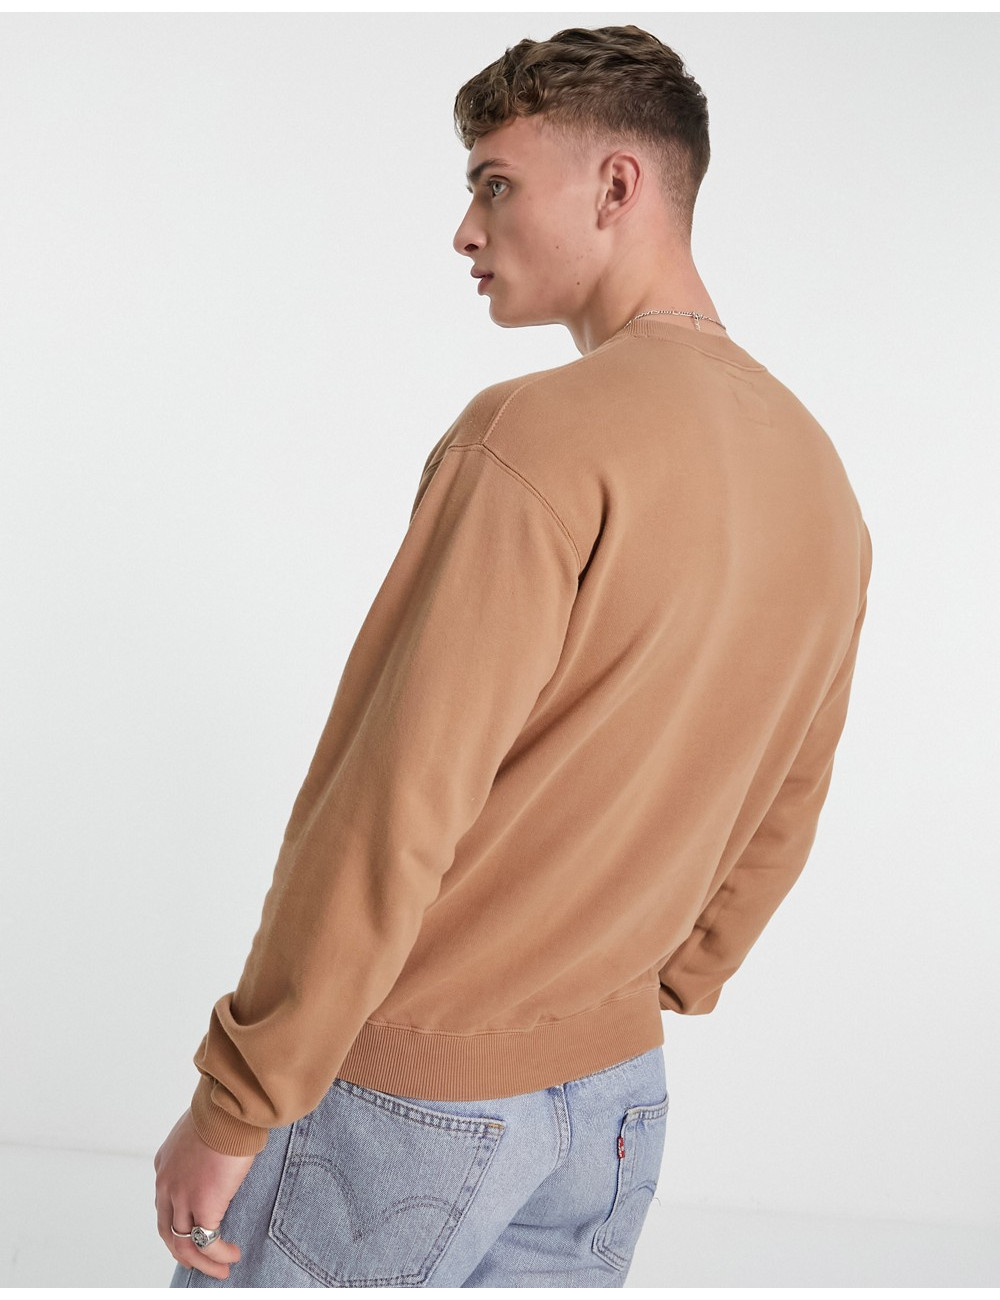 Gramicci sweatshirt in brown